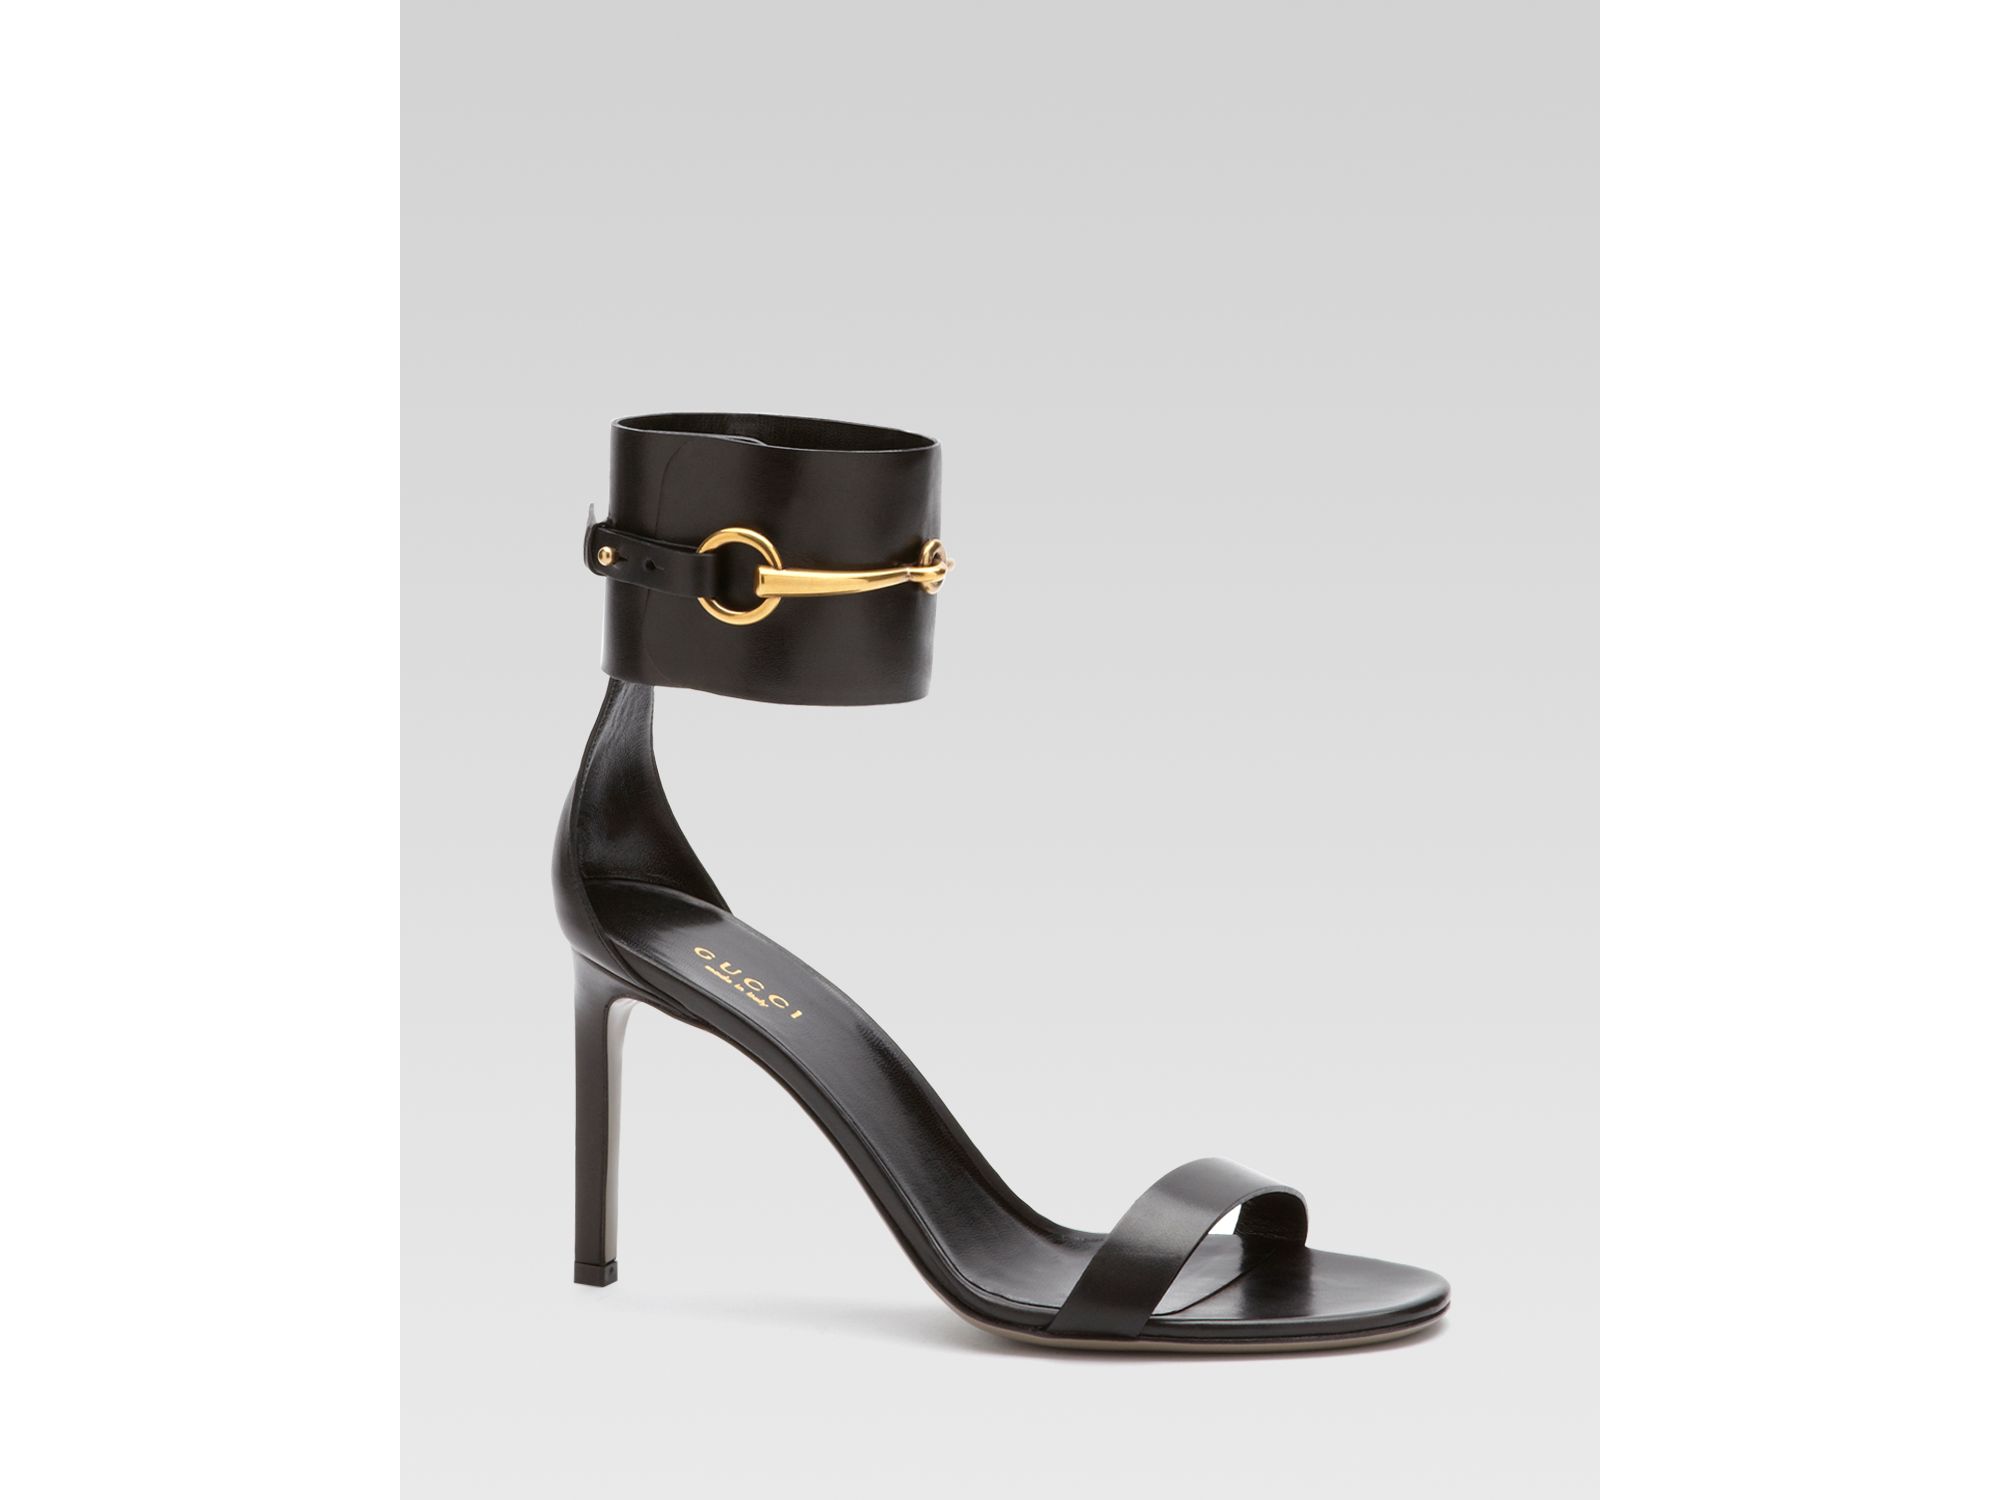 Buy > gucci ursula sandal heels > in stock